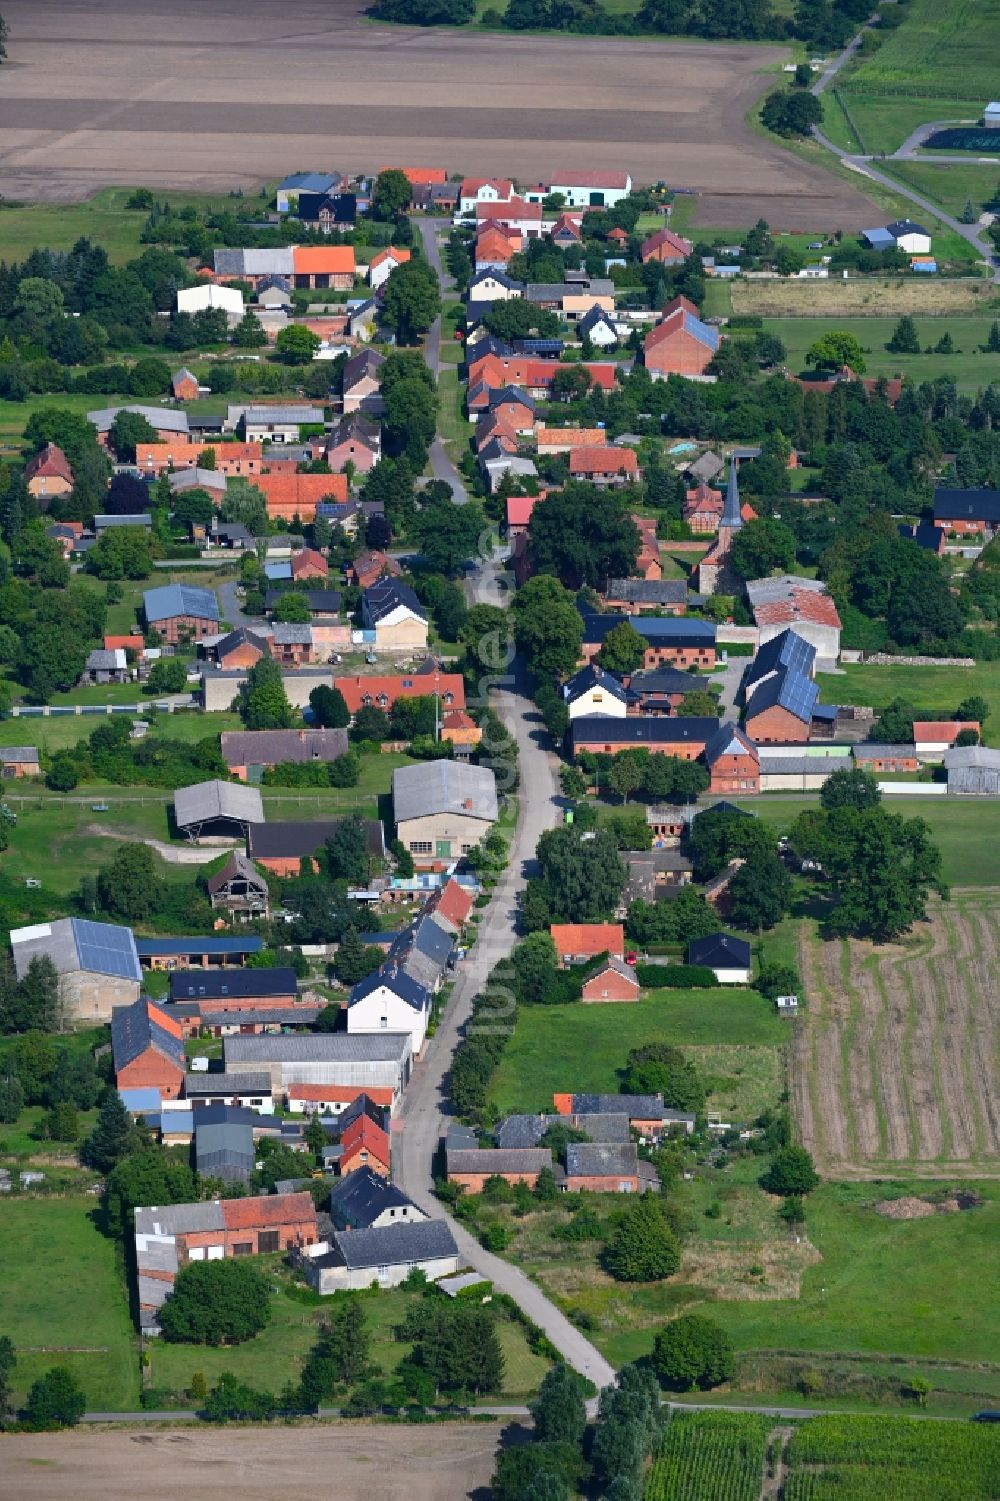 Luftbild Nebelin - Dorfkern am Feldrand in Nebelin im Bundesland Brandenburg, Deutschland